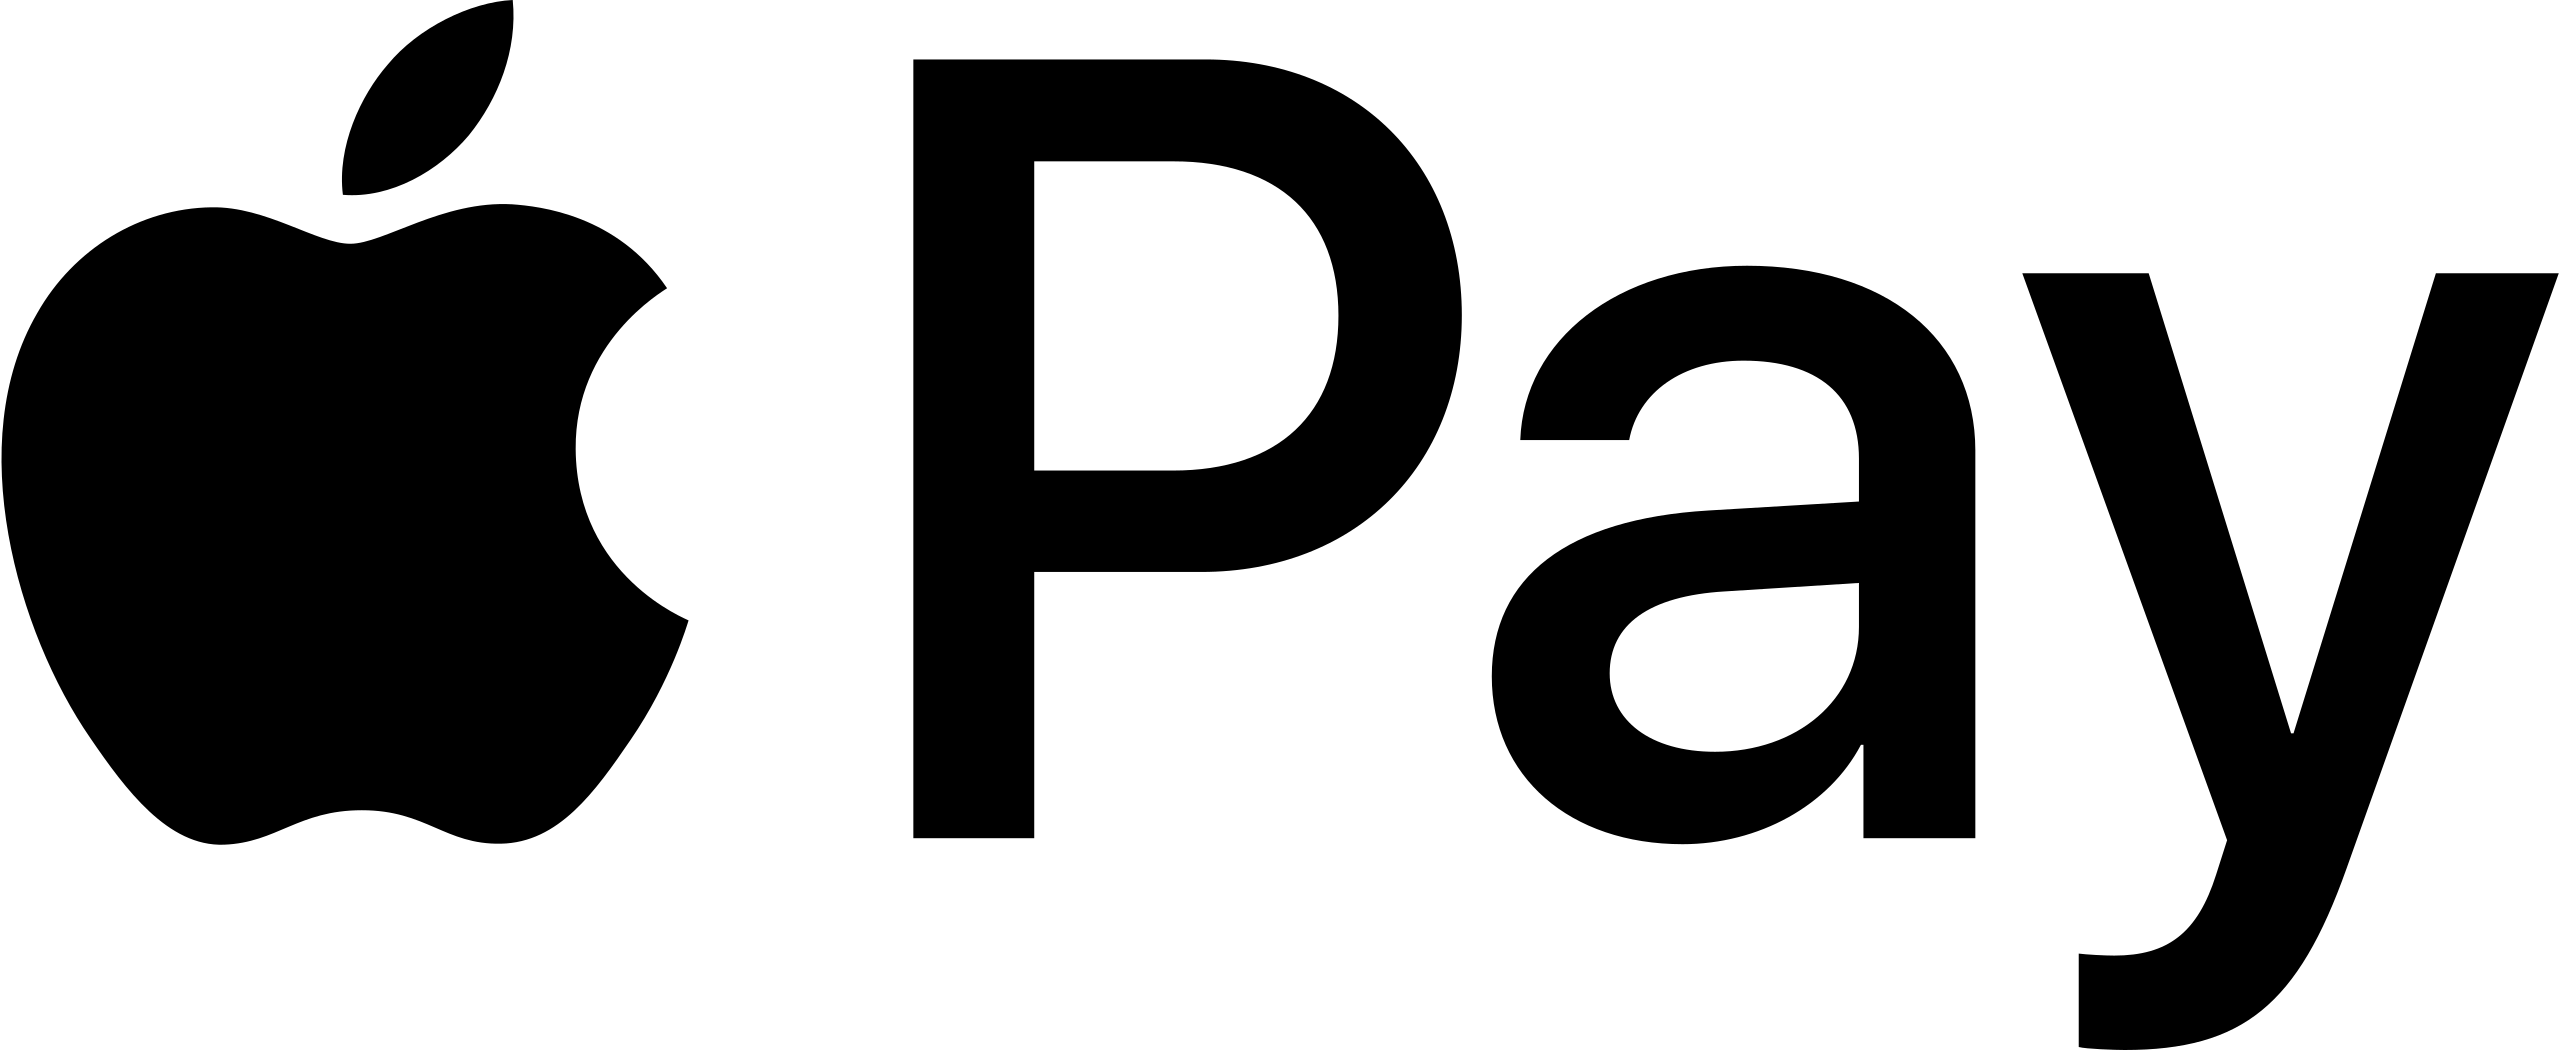 Archivo:Apple Pay logo.svg - Wikipedia, la enciclopedia libre